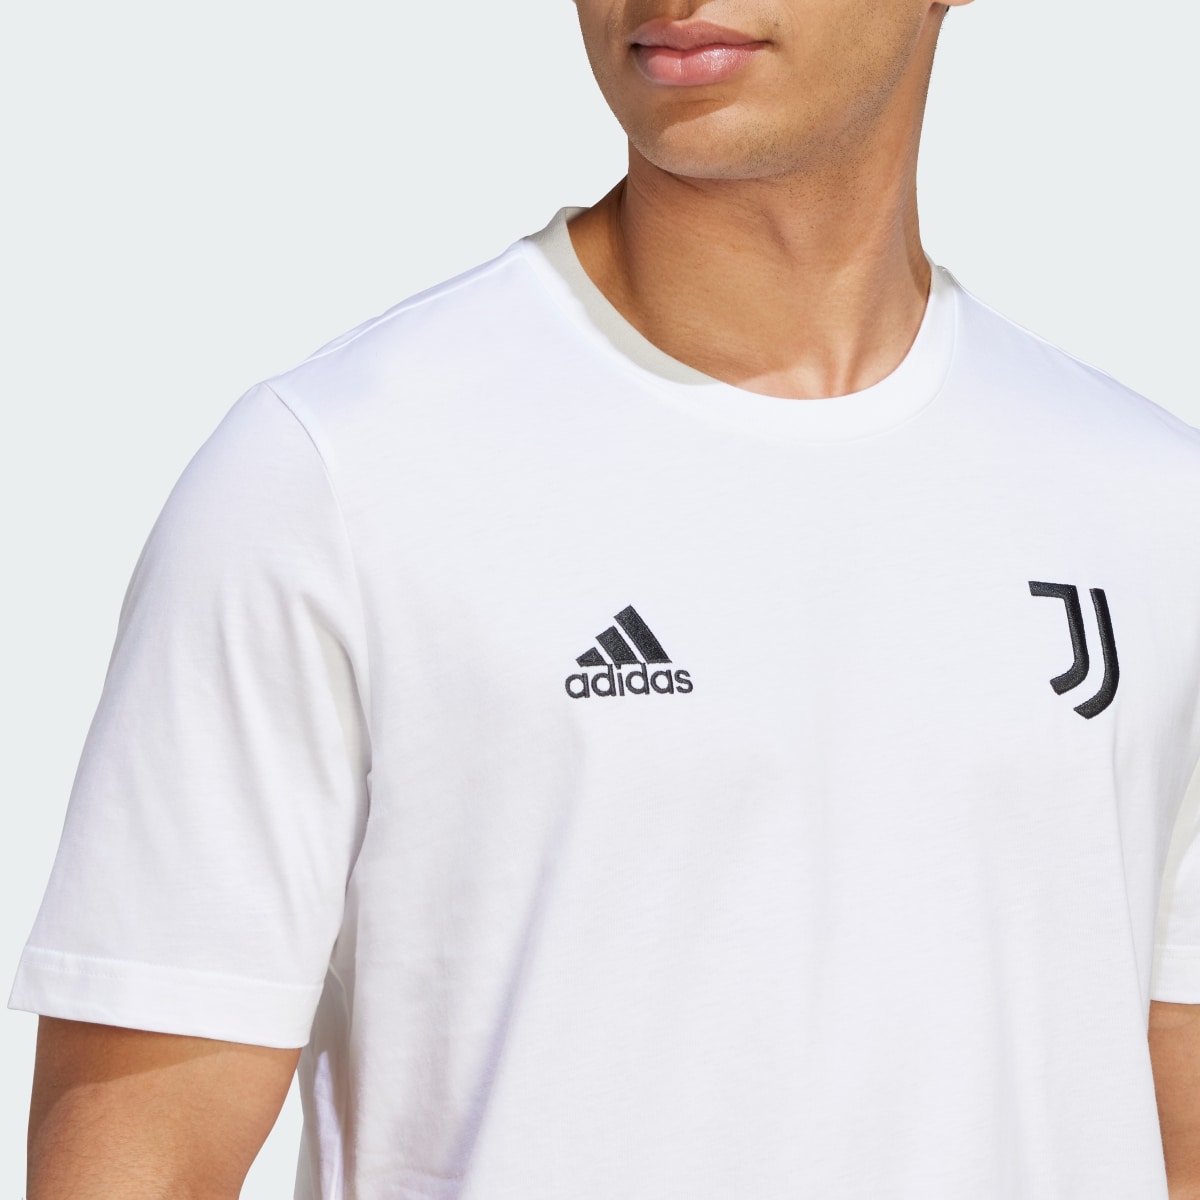 Adidas T-shirt DNA Juventus. 7